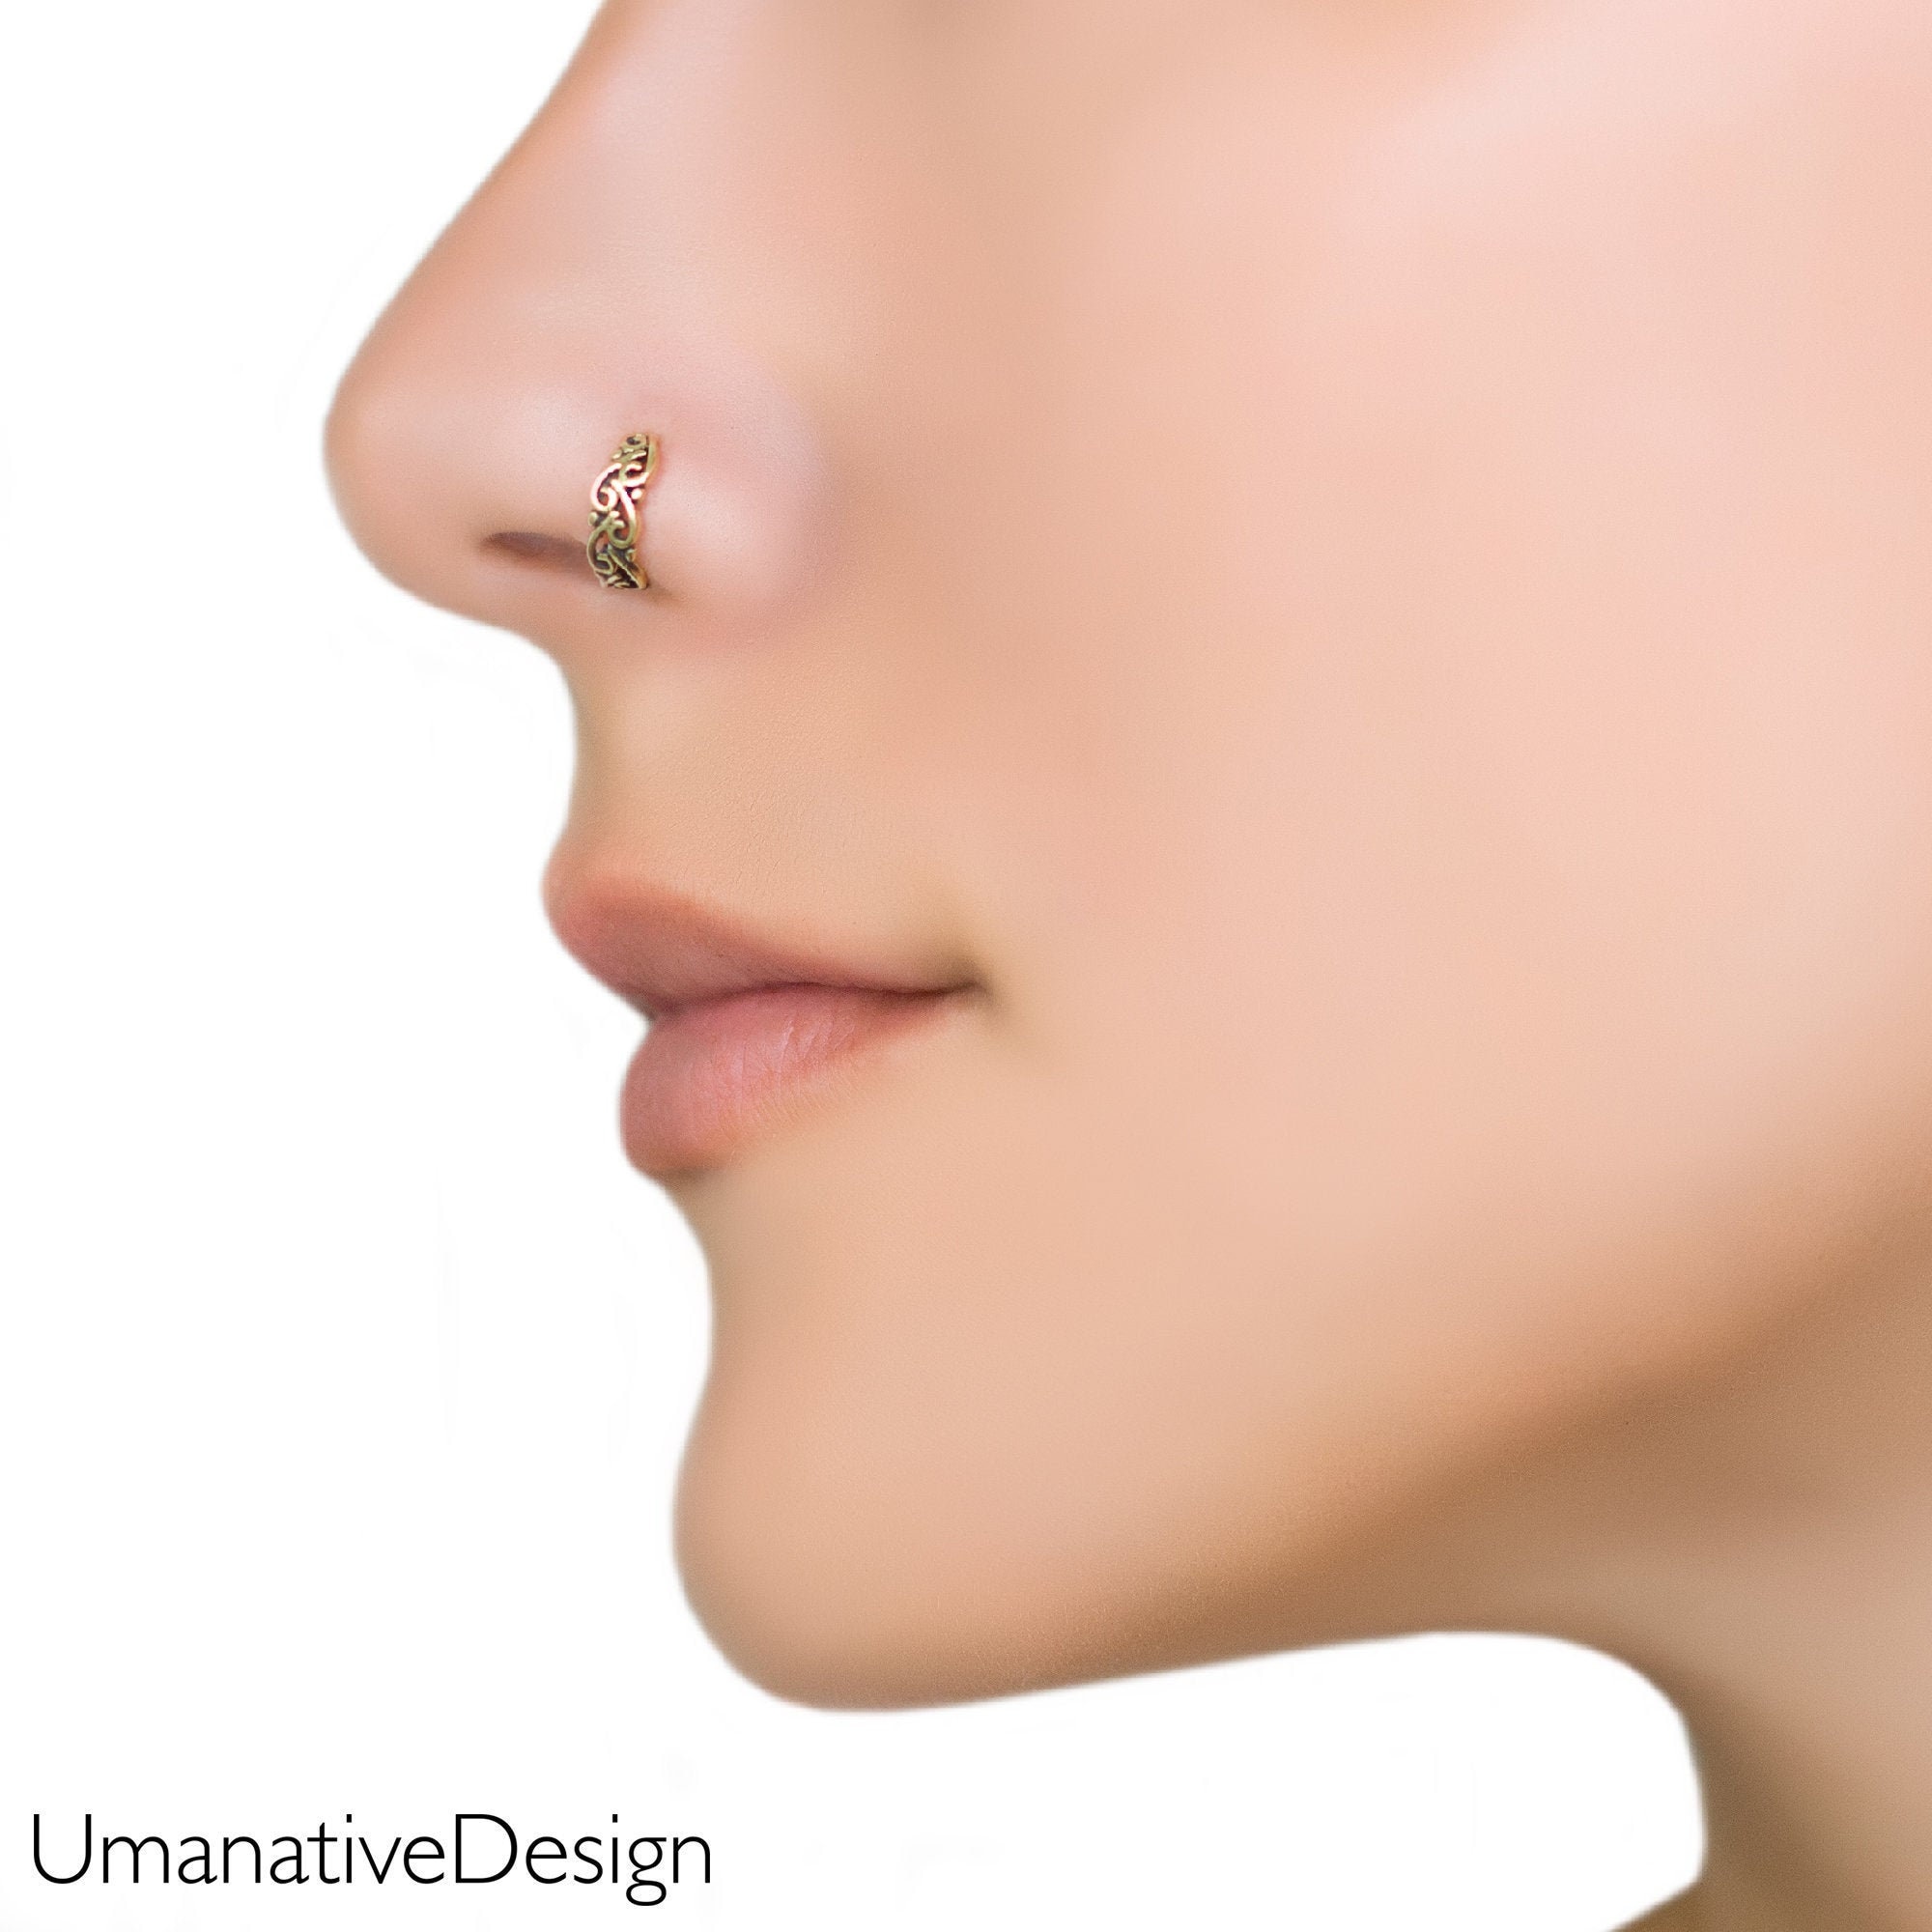 सिर्फ 630 रुपए से सोने की नथनी डिजाइन // Gold Nose Ring Designs With Price  @Ornamentss28 - YouTube